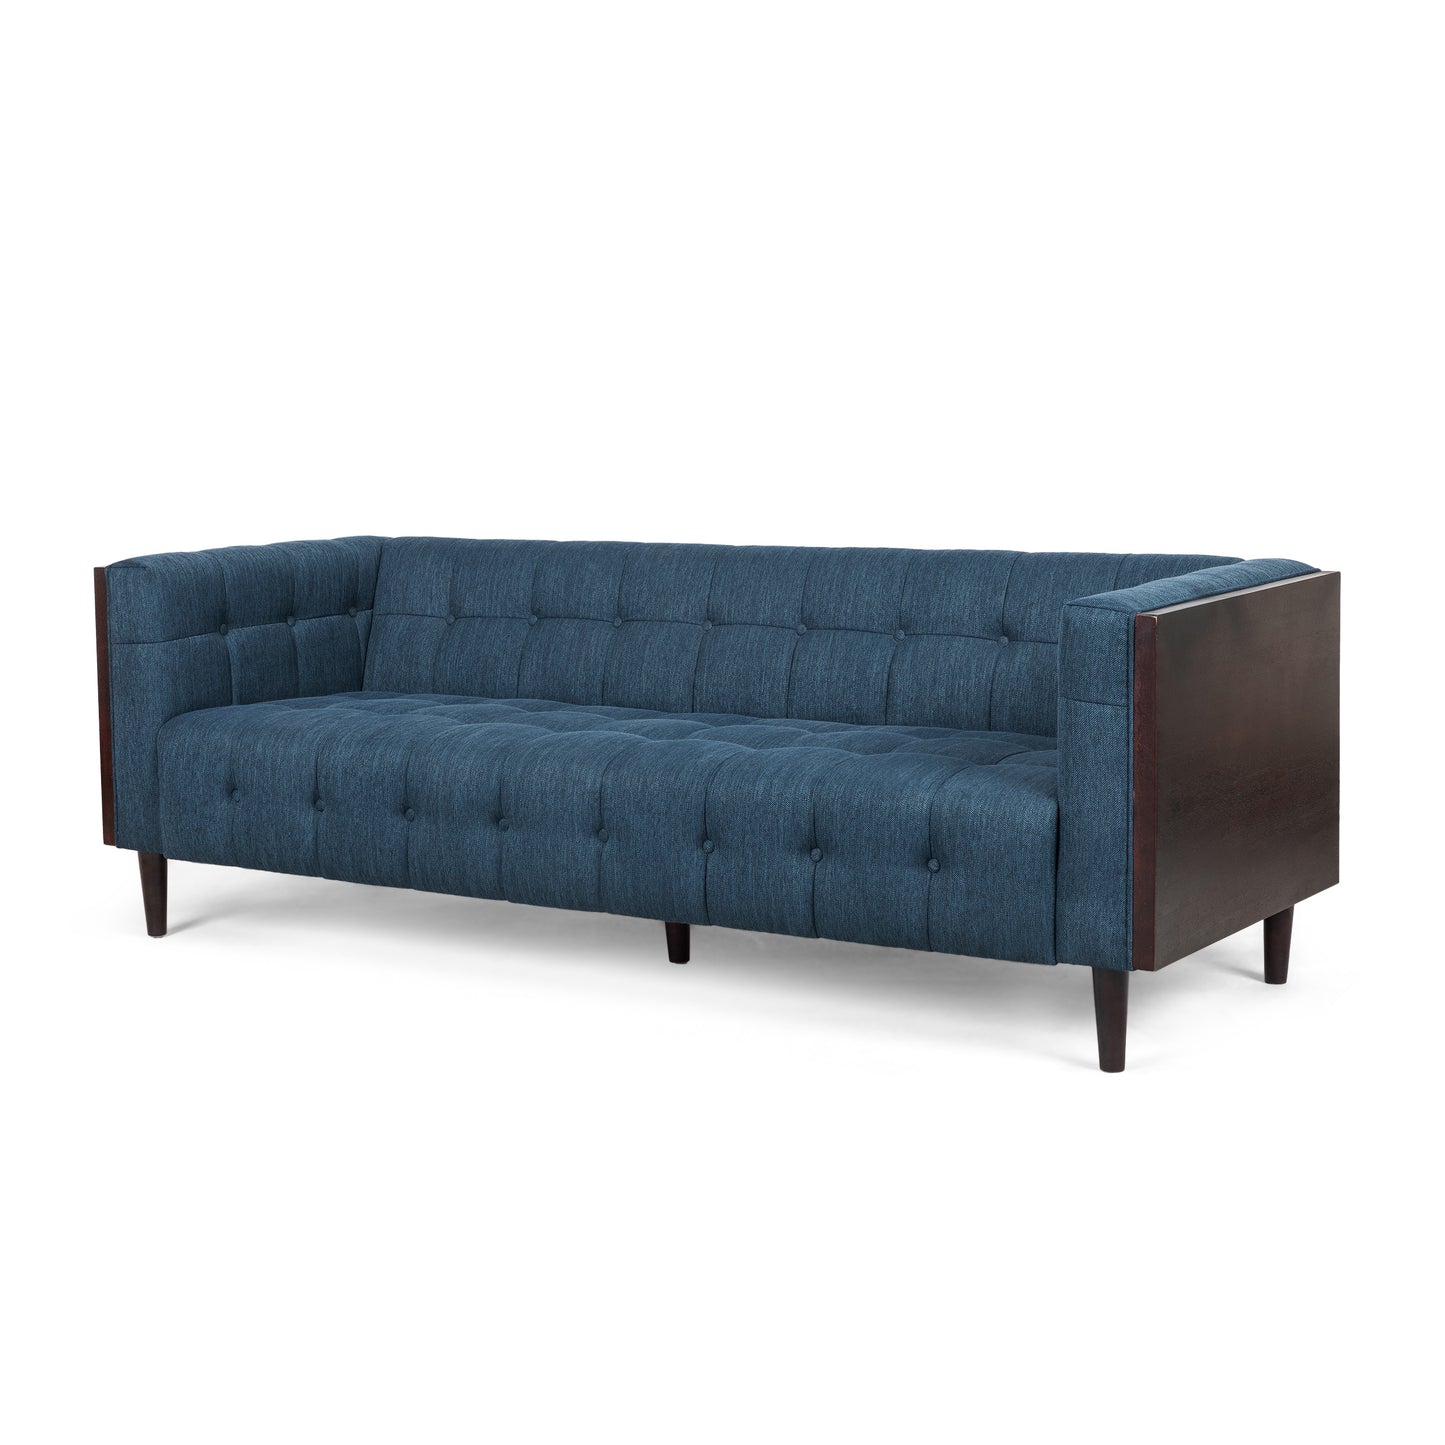 Croton Contemporary Tufted 3 Seater Sofa